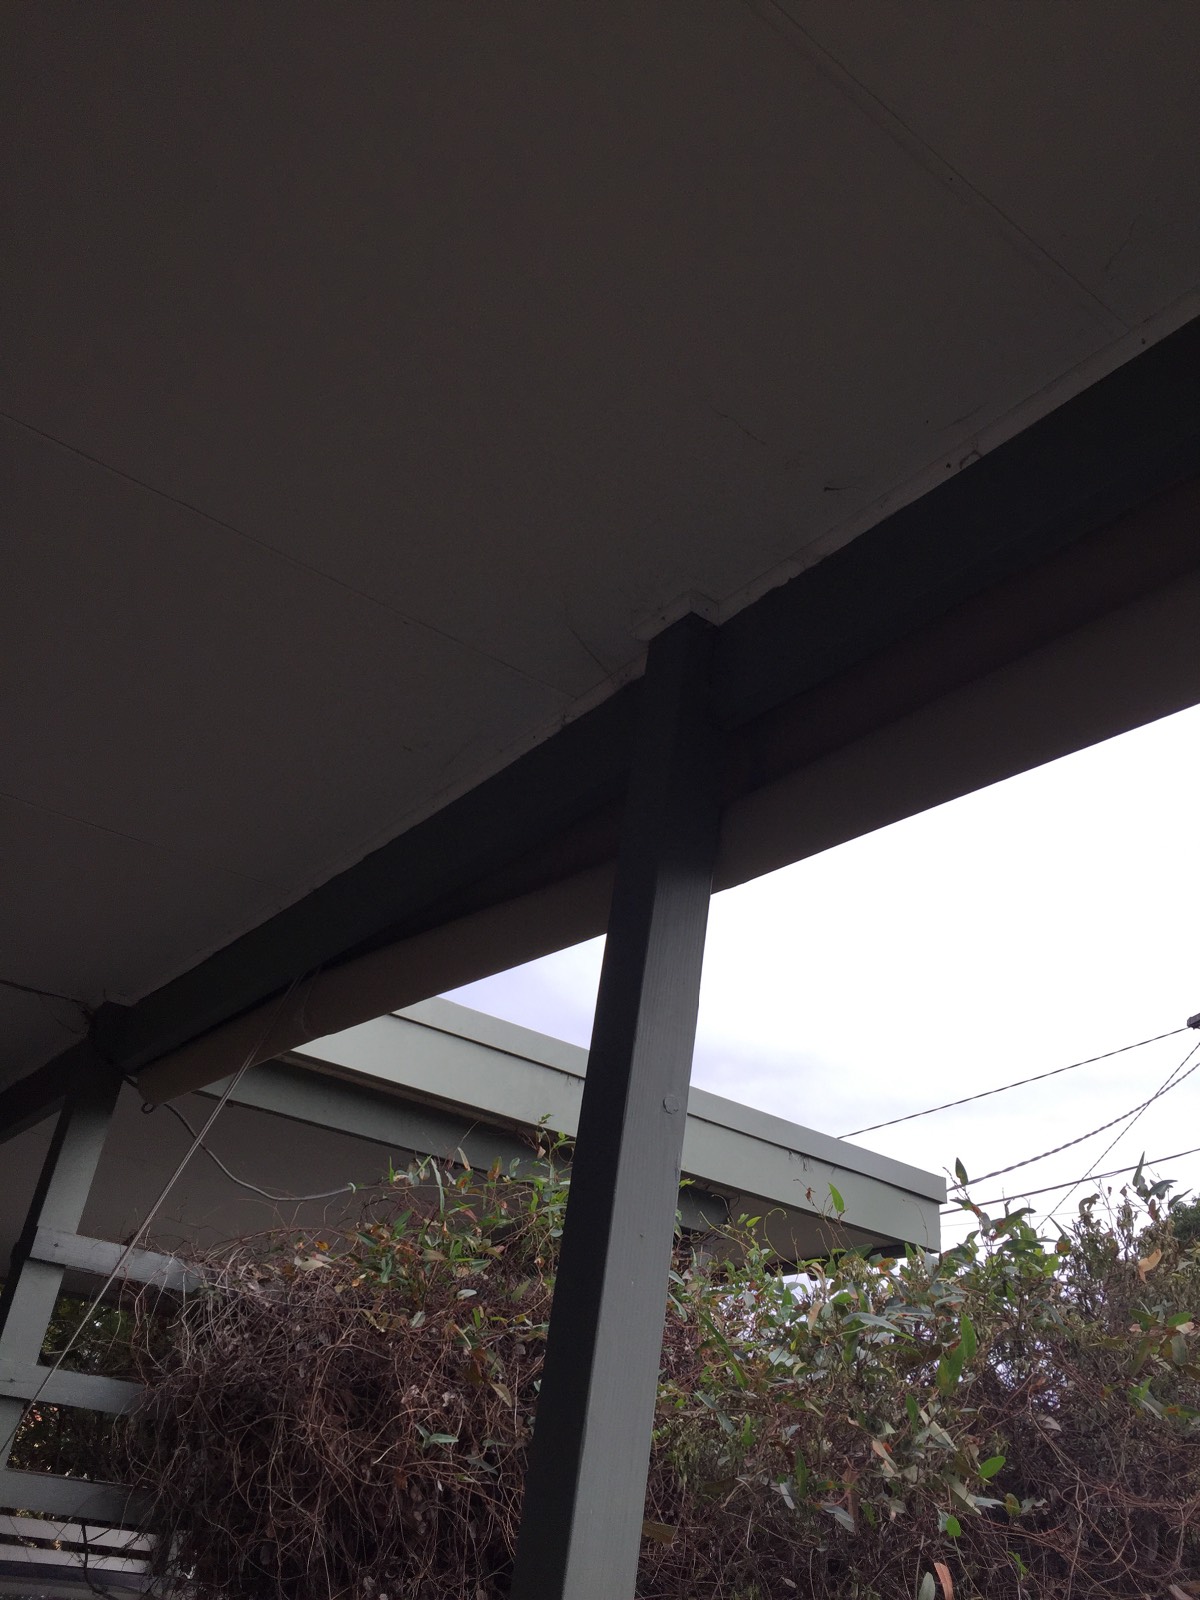 Replacing porch support beams